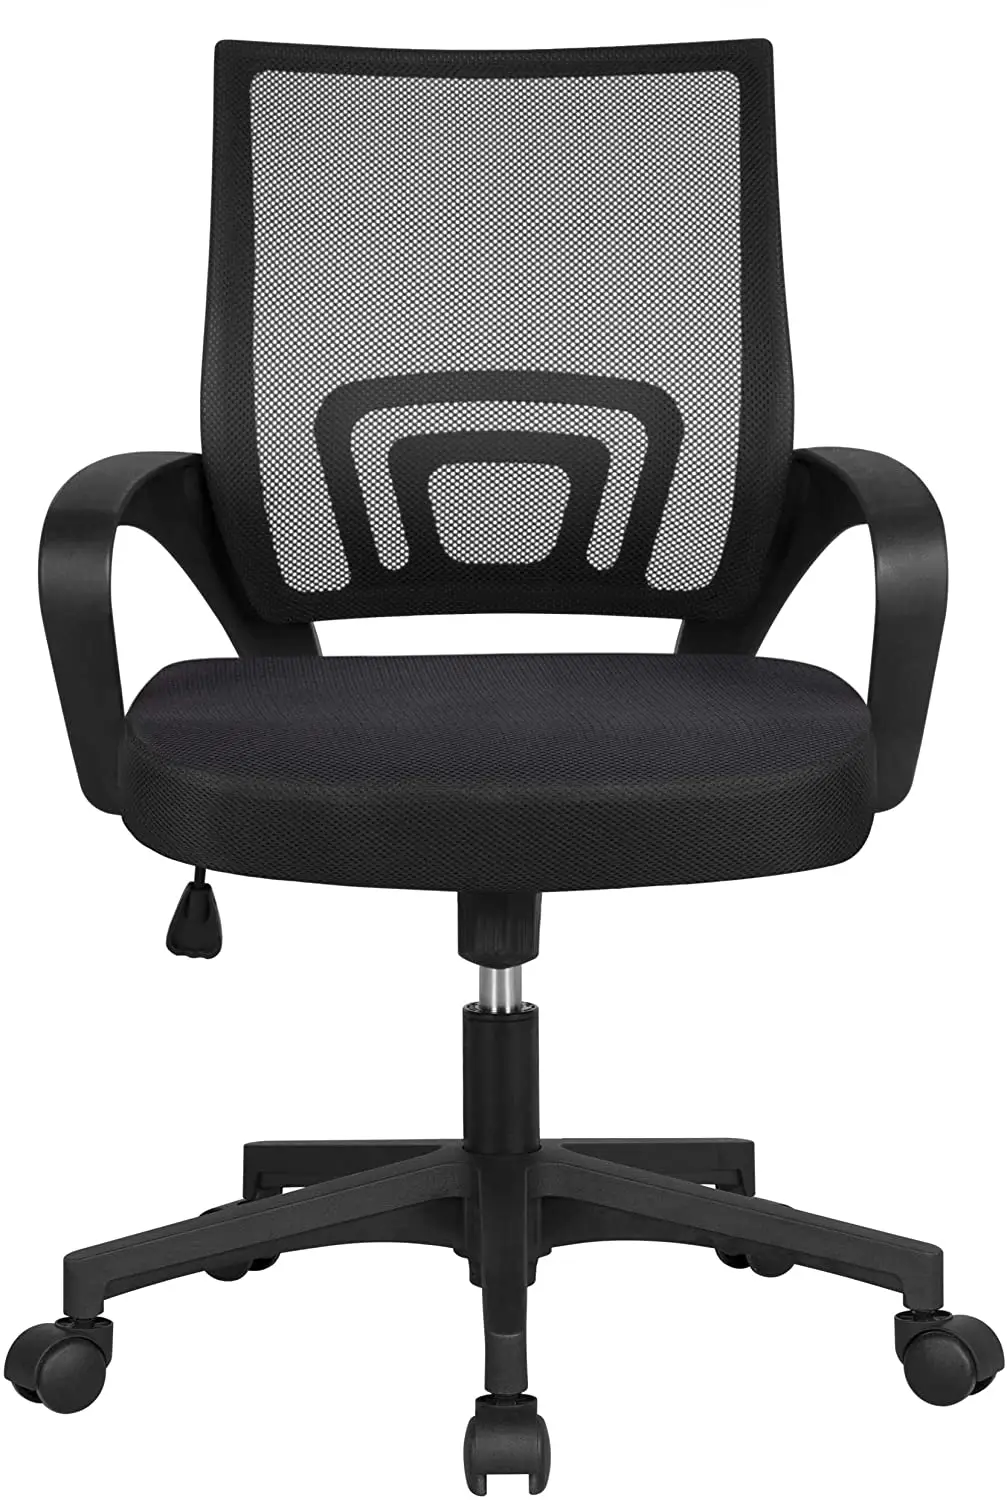 office chair ergonomic desk chair midback big cheap computer chair mesh  swivel chair with lumbar support